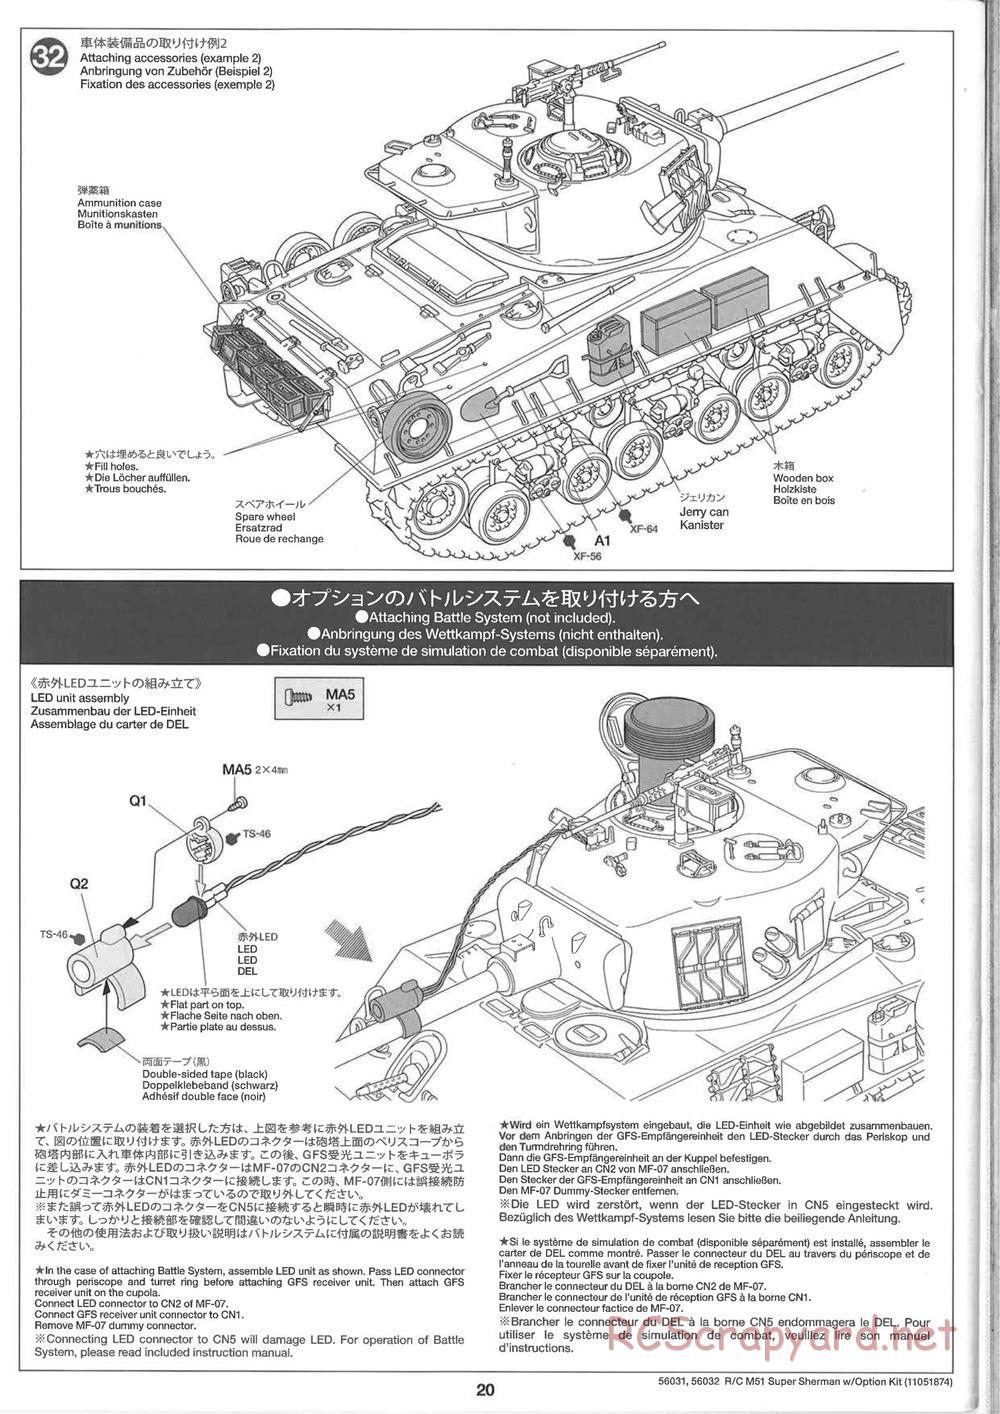 Tamiya - Super Sherman M-51 - 1/16 Scale Chassis - Manual - Page 20